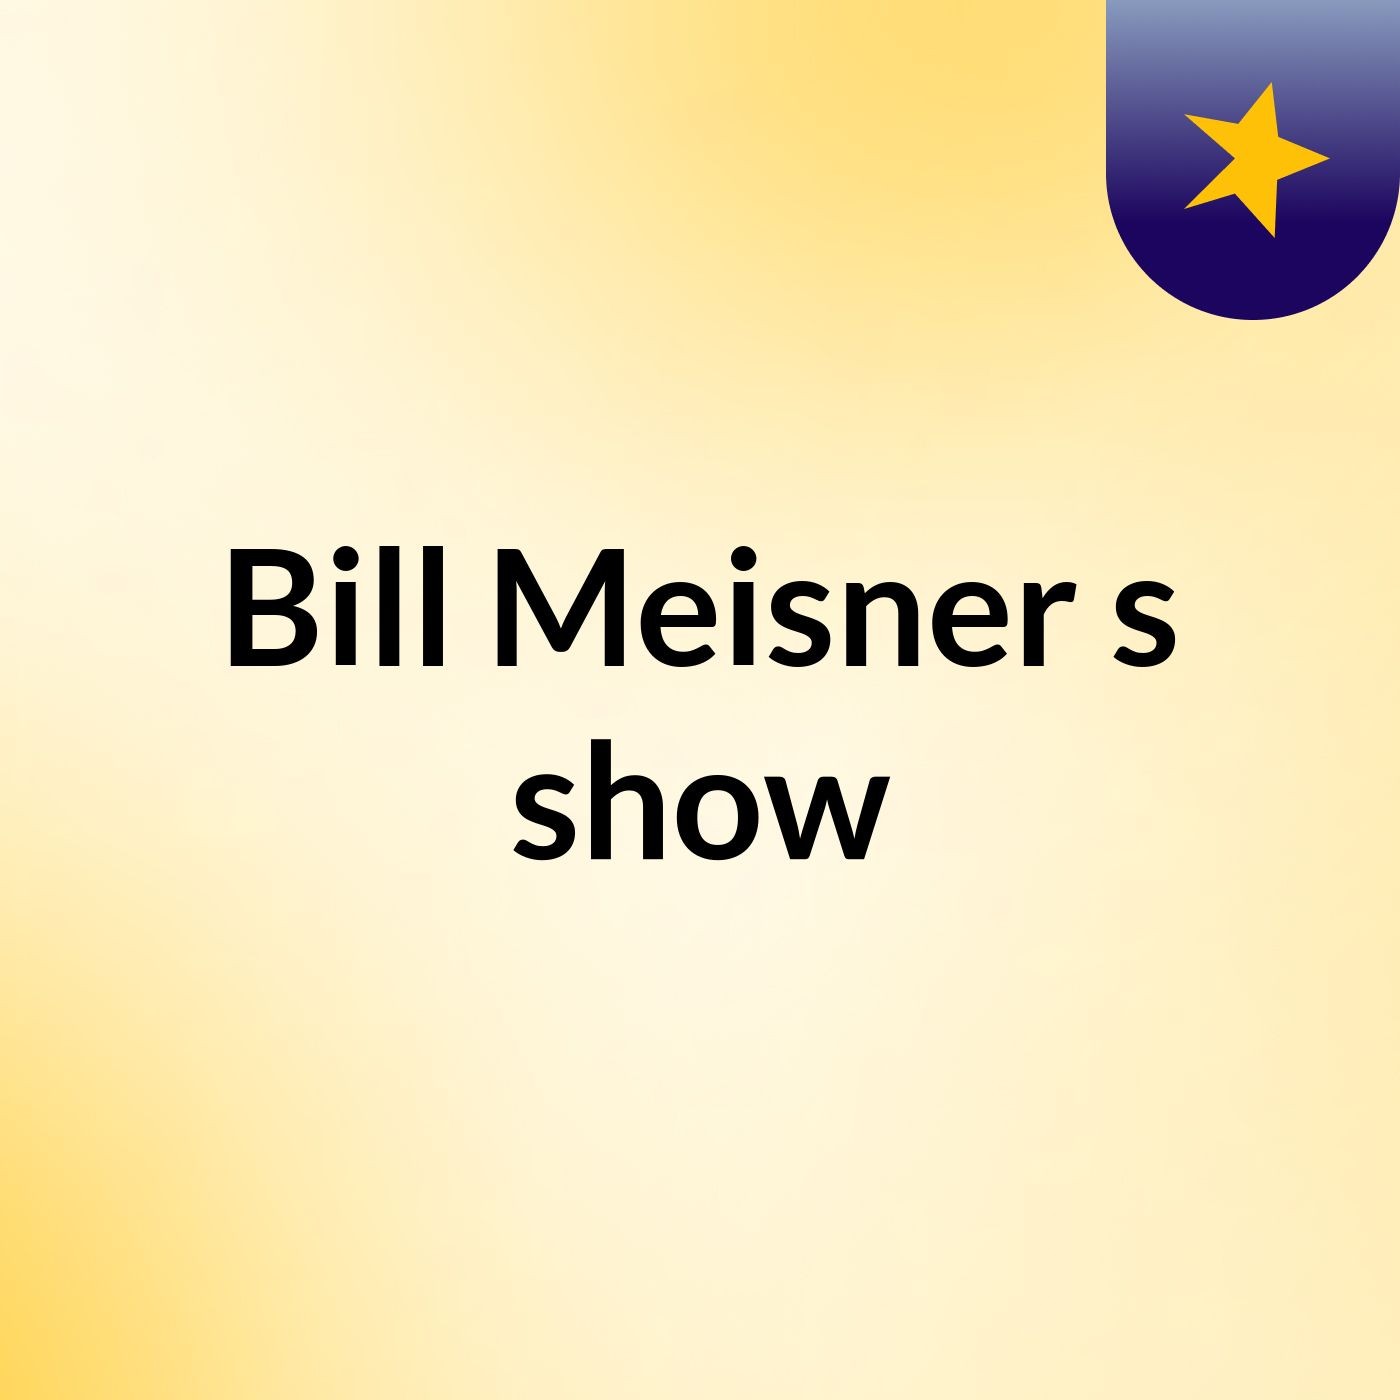 Bill Meisner's show